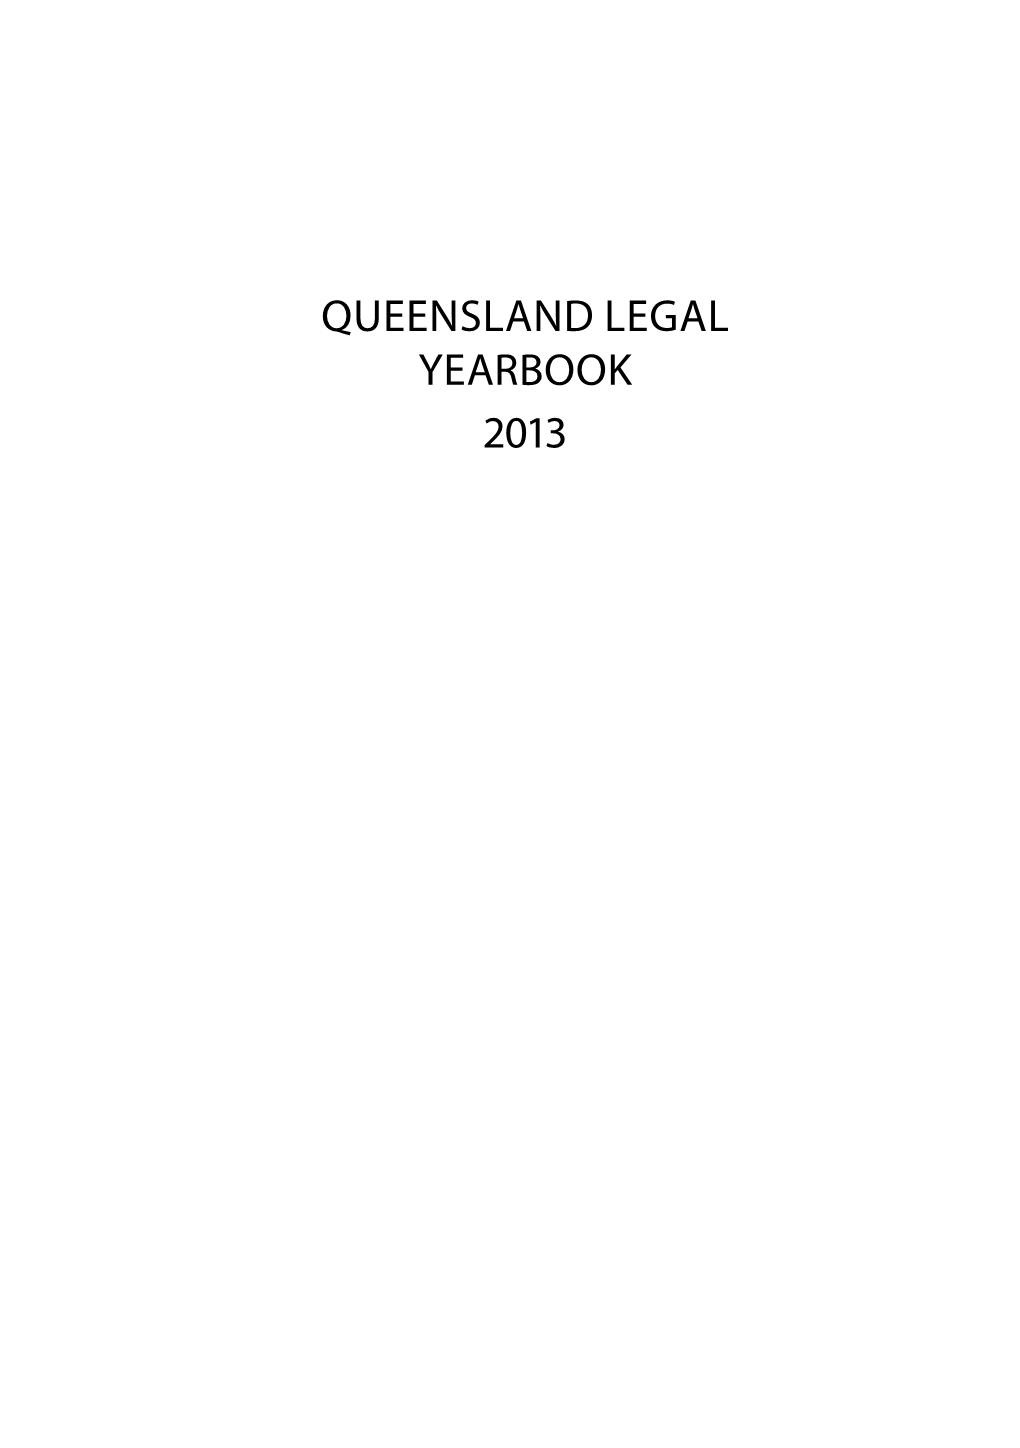 Queensland Legal Yearbook 2013 Published by Supreme Court Library Queensland Level 12, 415 George Street Brisbane, Queensland, Australia